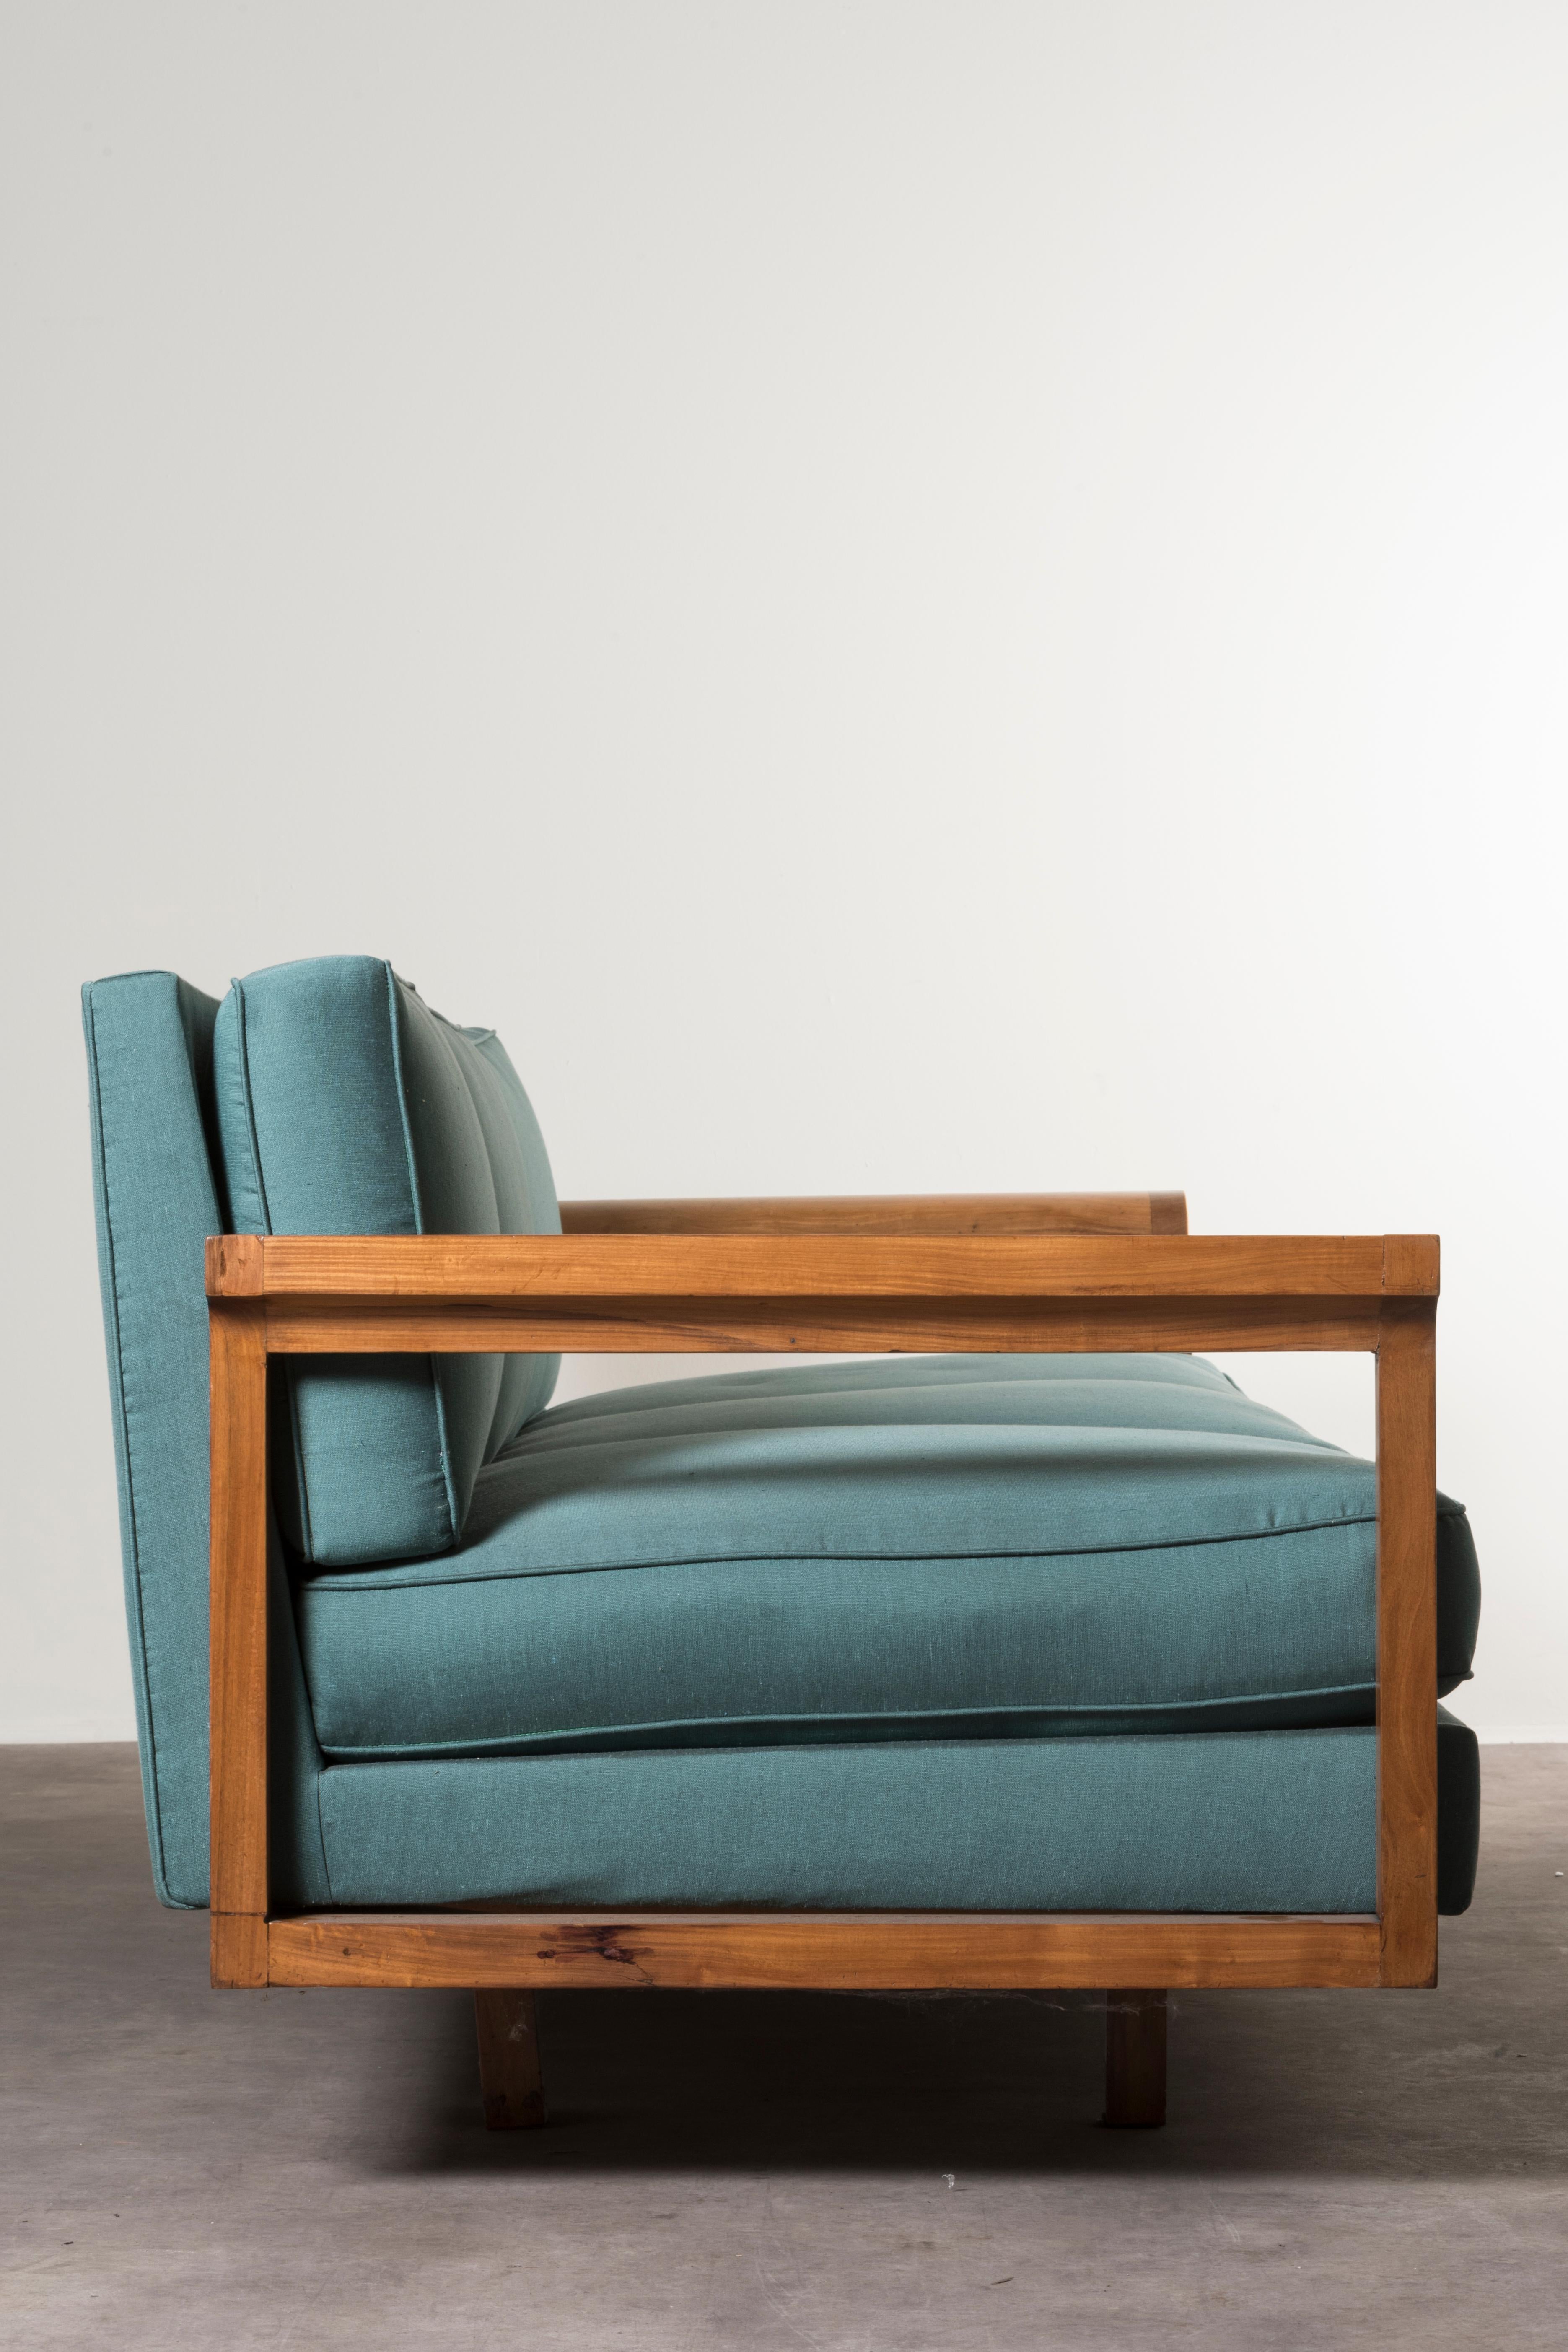 Wood 1950 Branco e Preto-Sofa wood fabric upholstery Manufactured by Paubrà For Sale